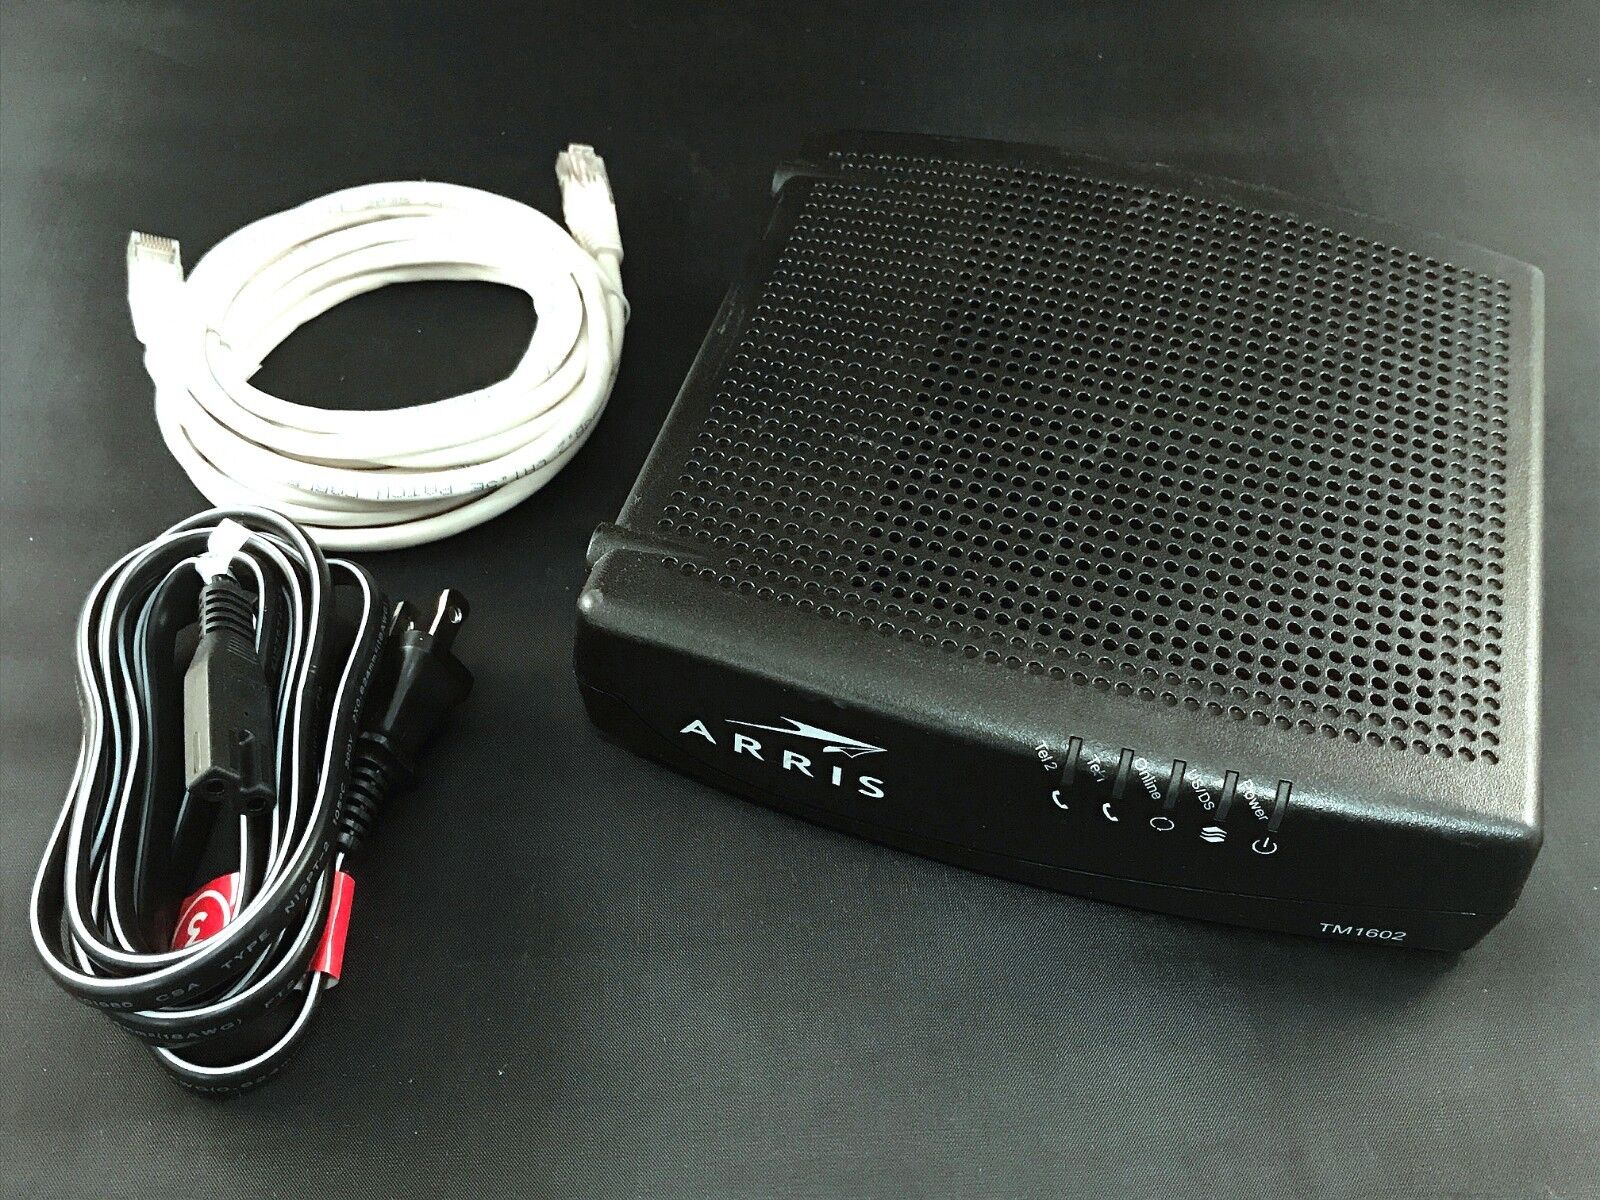 Arris TM1602A Cable Modem Docsis 3.0 Telephony Modem